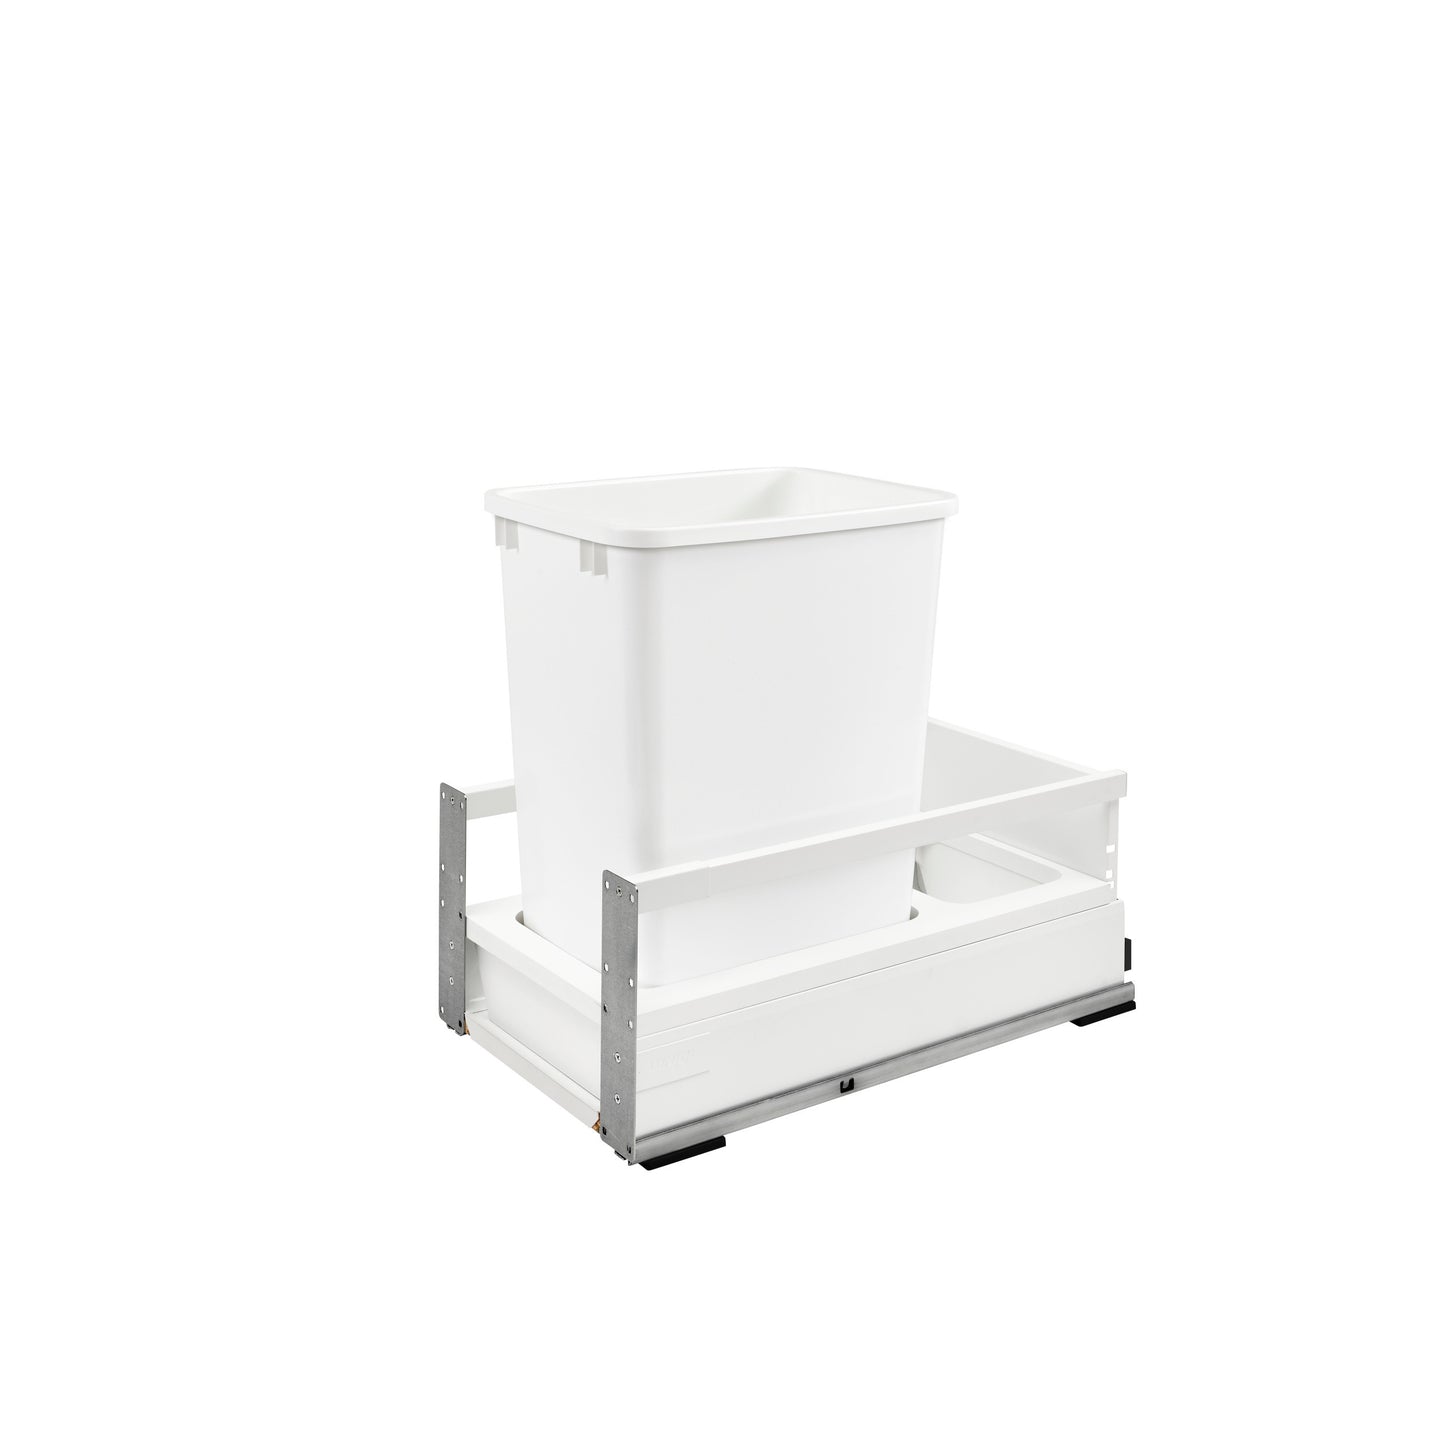 Rev-A-Shelf / TWCSC-1550DM-1 / Tandem Pullout Waste/Trash Container w/ Soft-Close